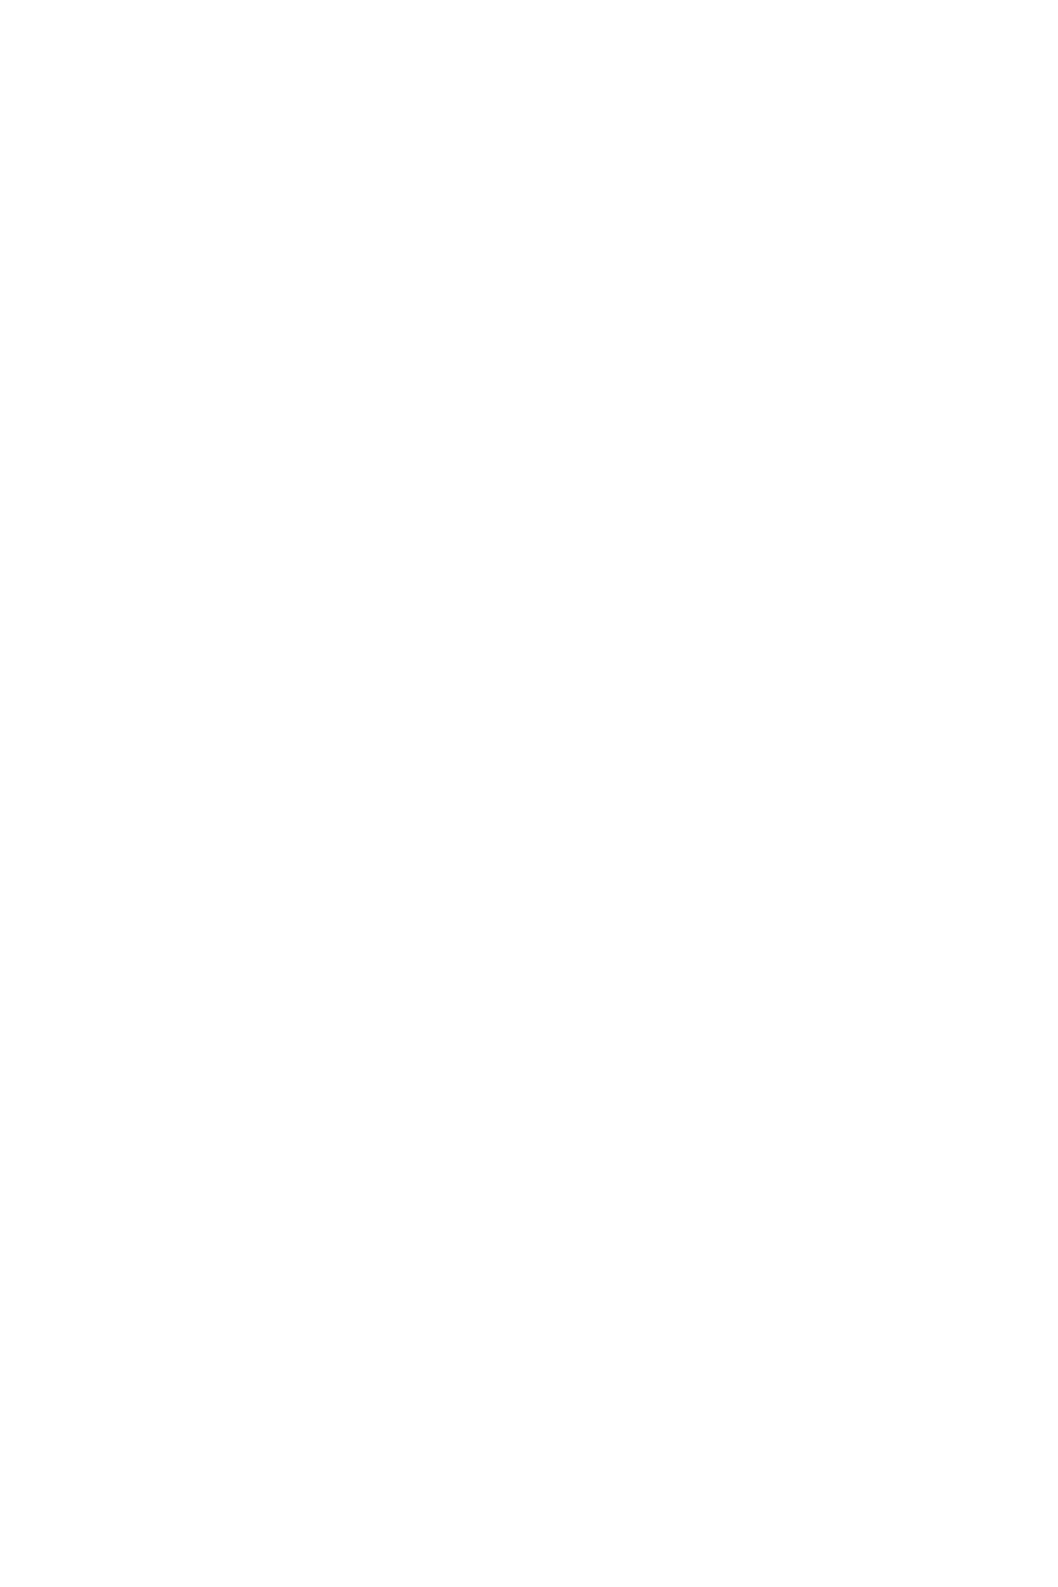 Unipol Gruppo logo pour fonds sombres (PNG transparent)